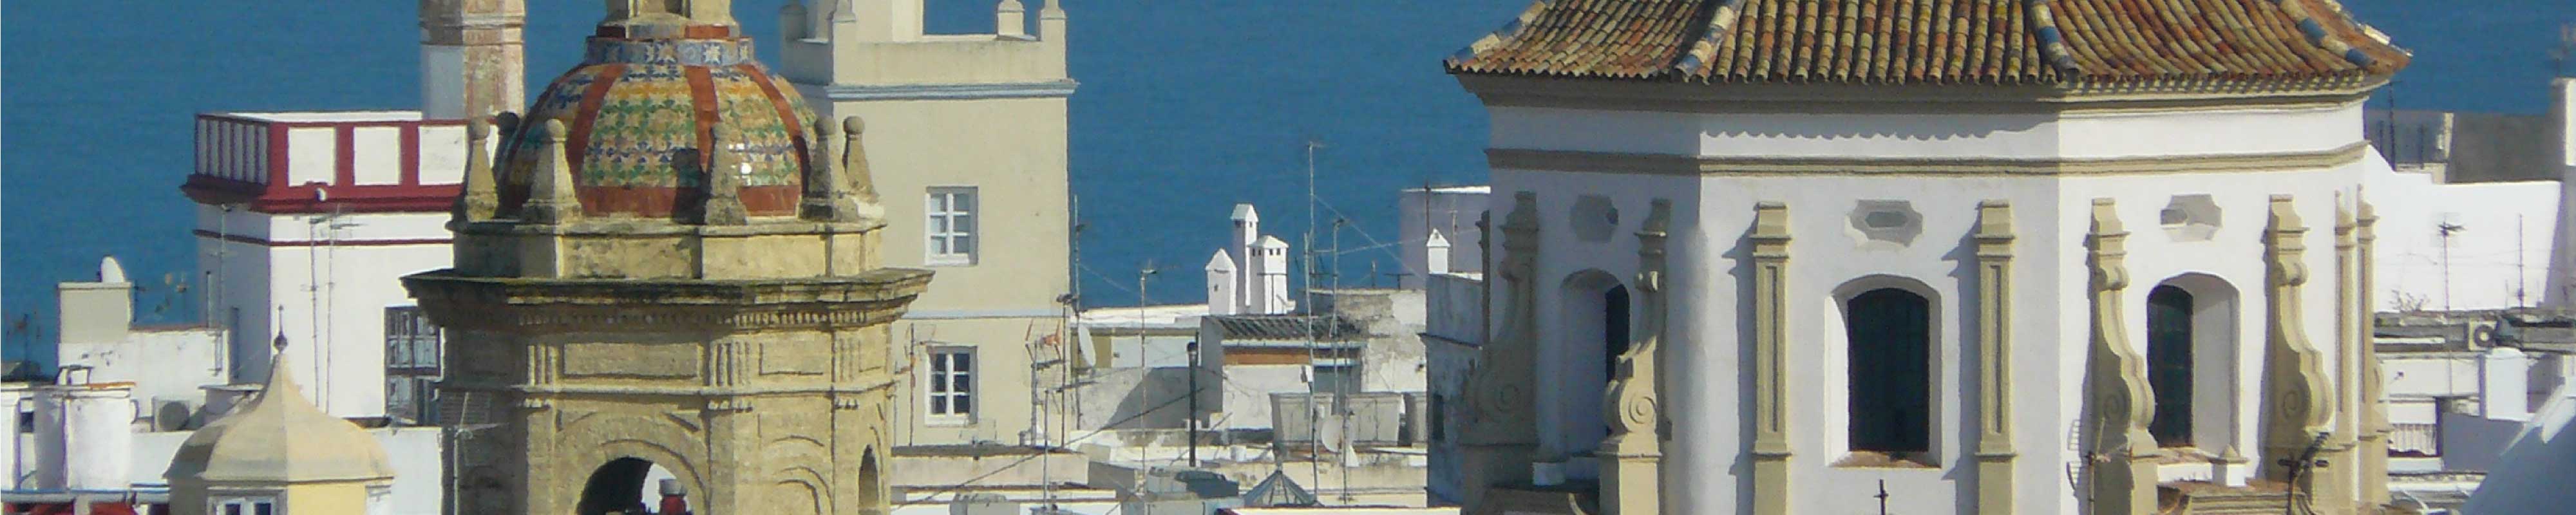 Consigna Equipaje | centro de ciudad de Cádiz  en Cádiz - Nannybag